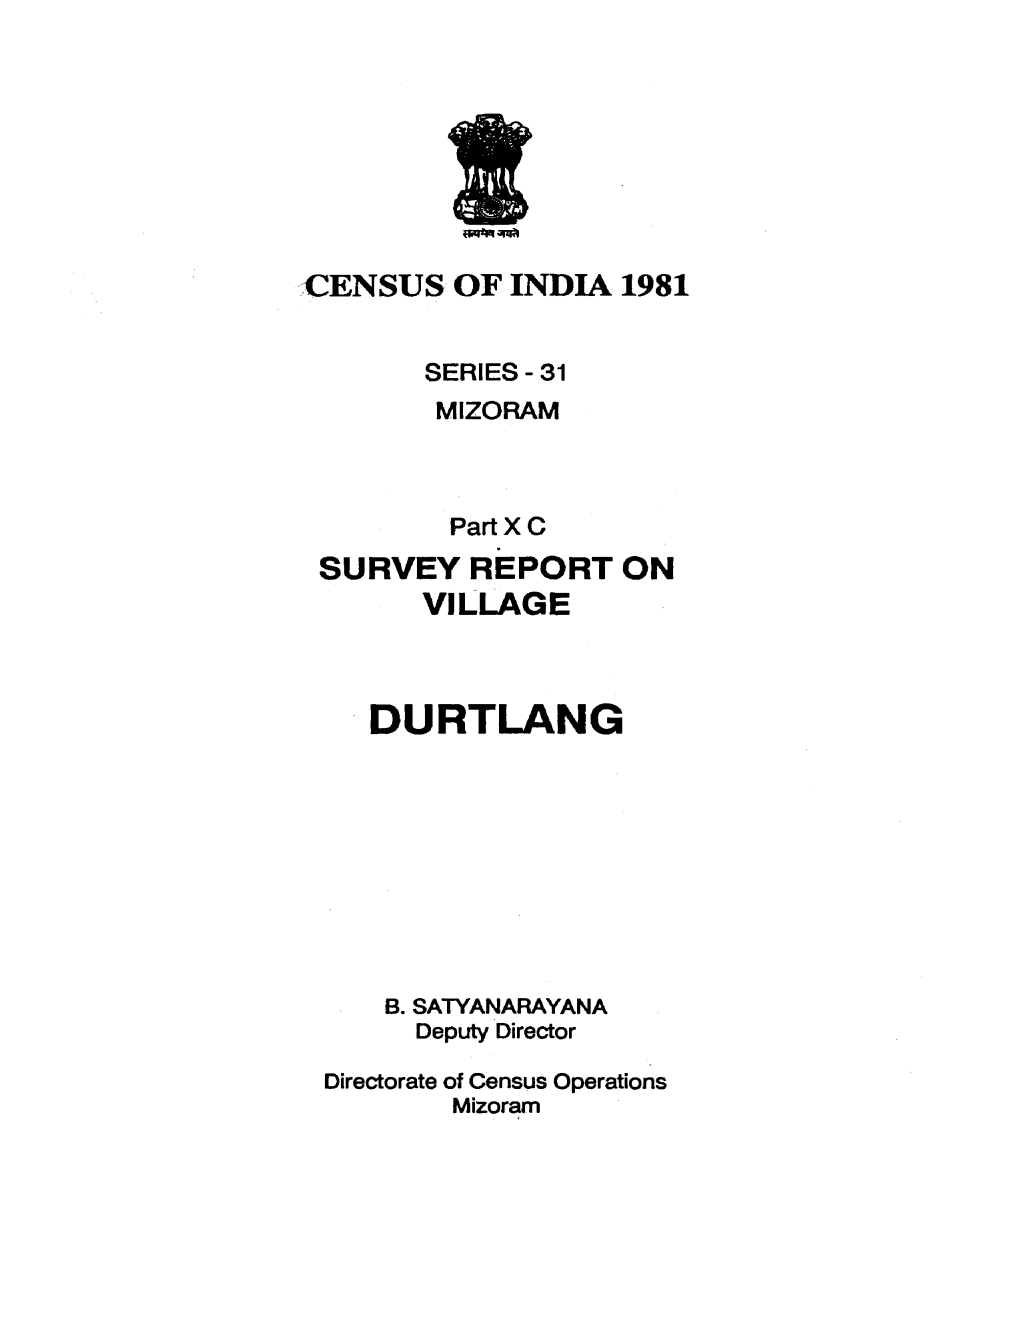 Survey Report on Village Durtlang, Part XC, Series-31, Mizoram